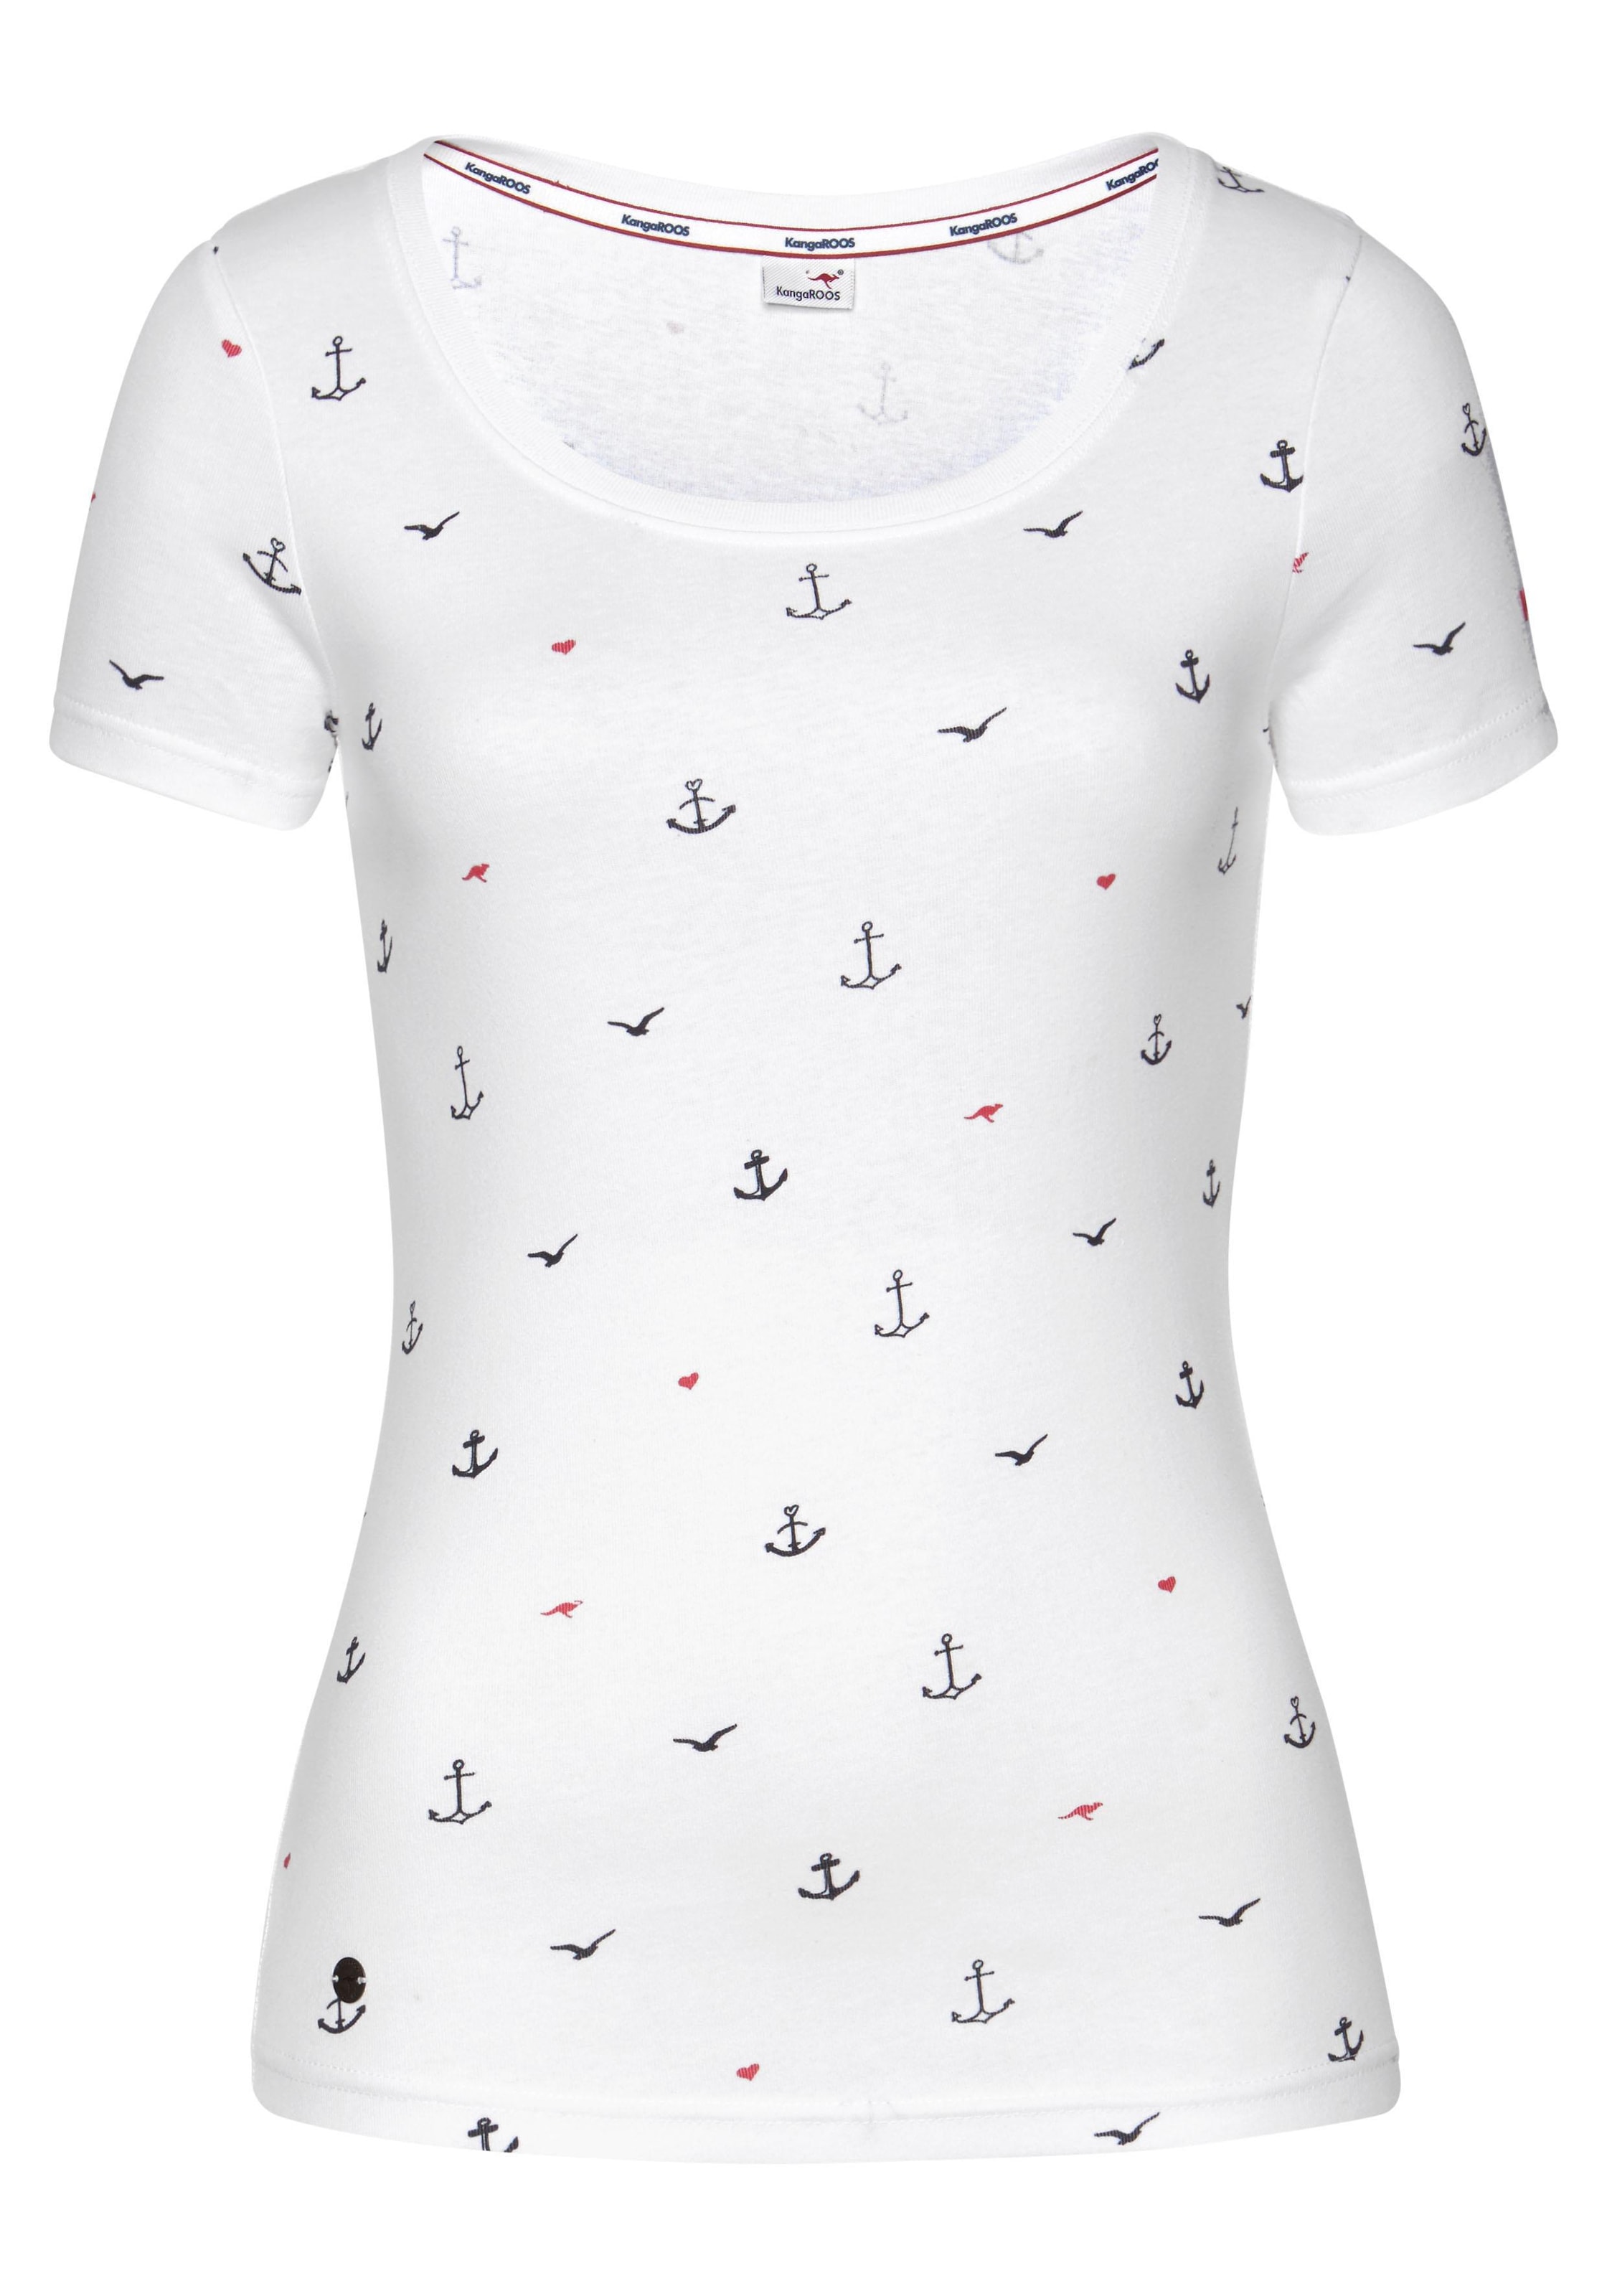 KangaROOS T-Shirt, mit Anker, Schiffchen oder Reh-Print shoppen